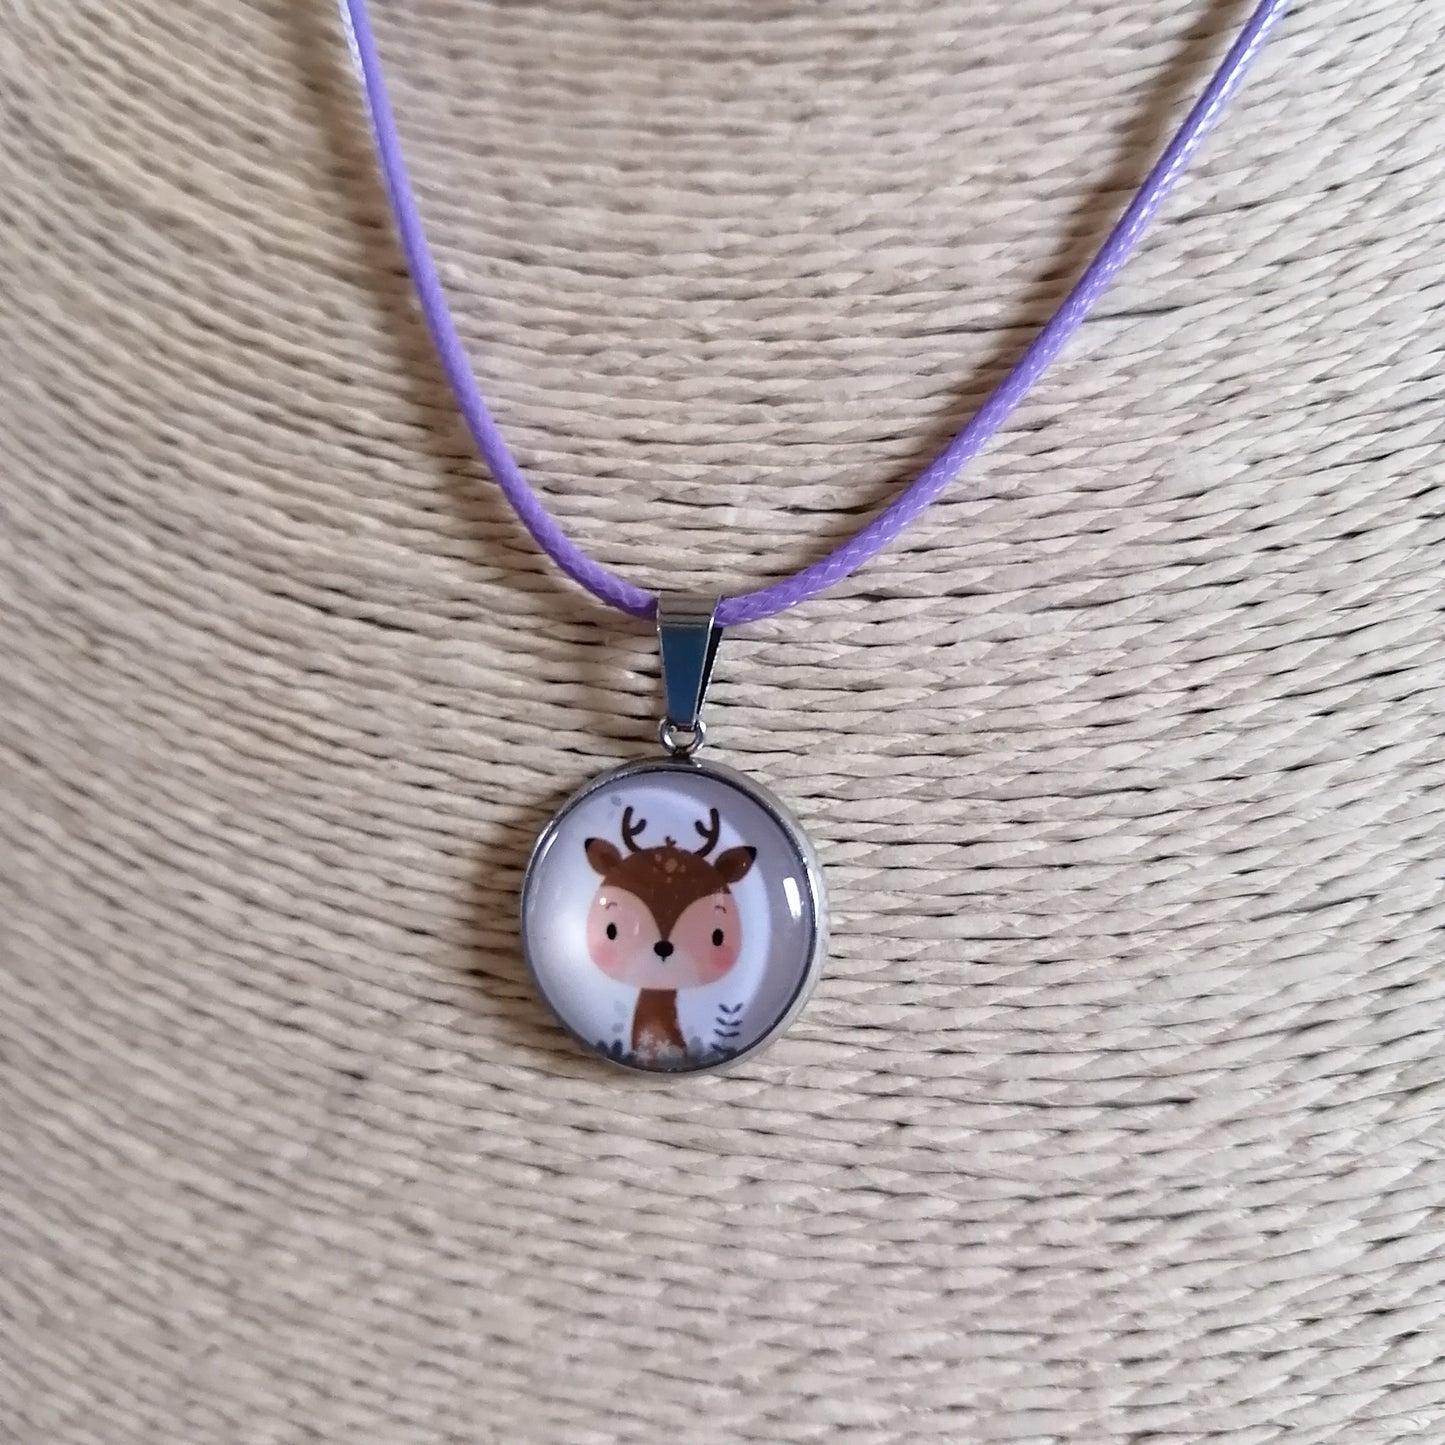 Collier enfant - renne - pendentif acier inoxydable - cordon violet